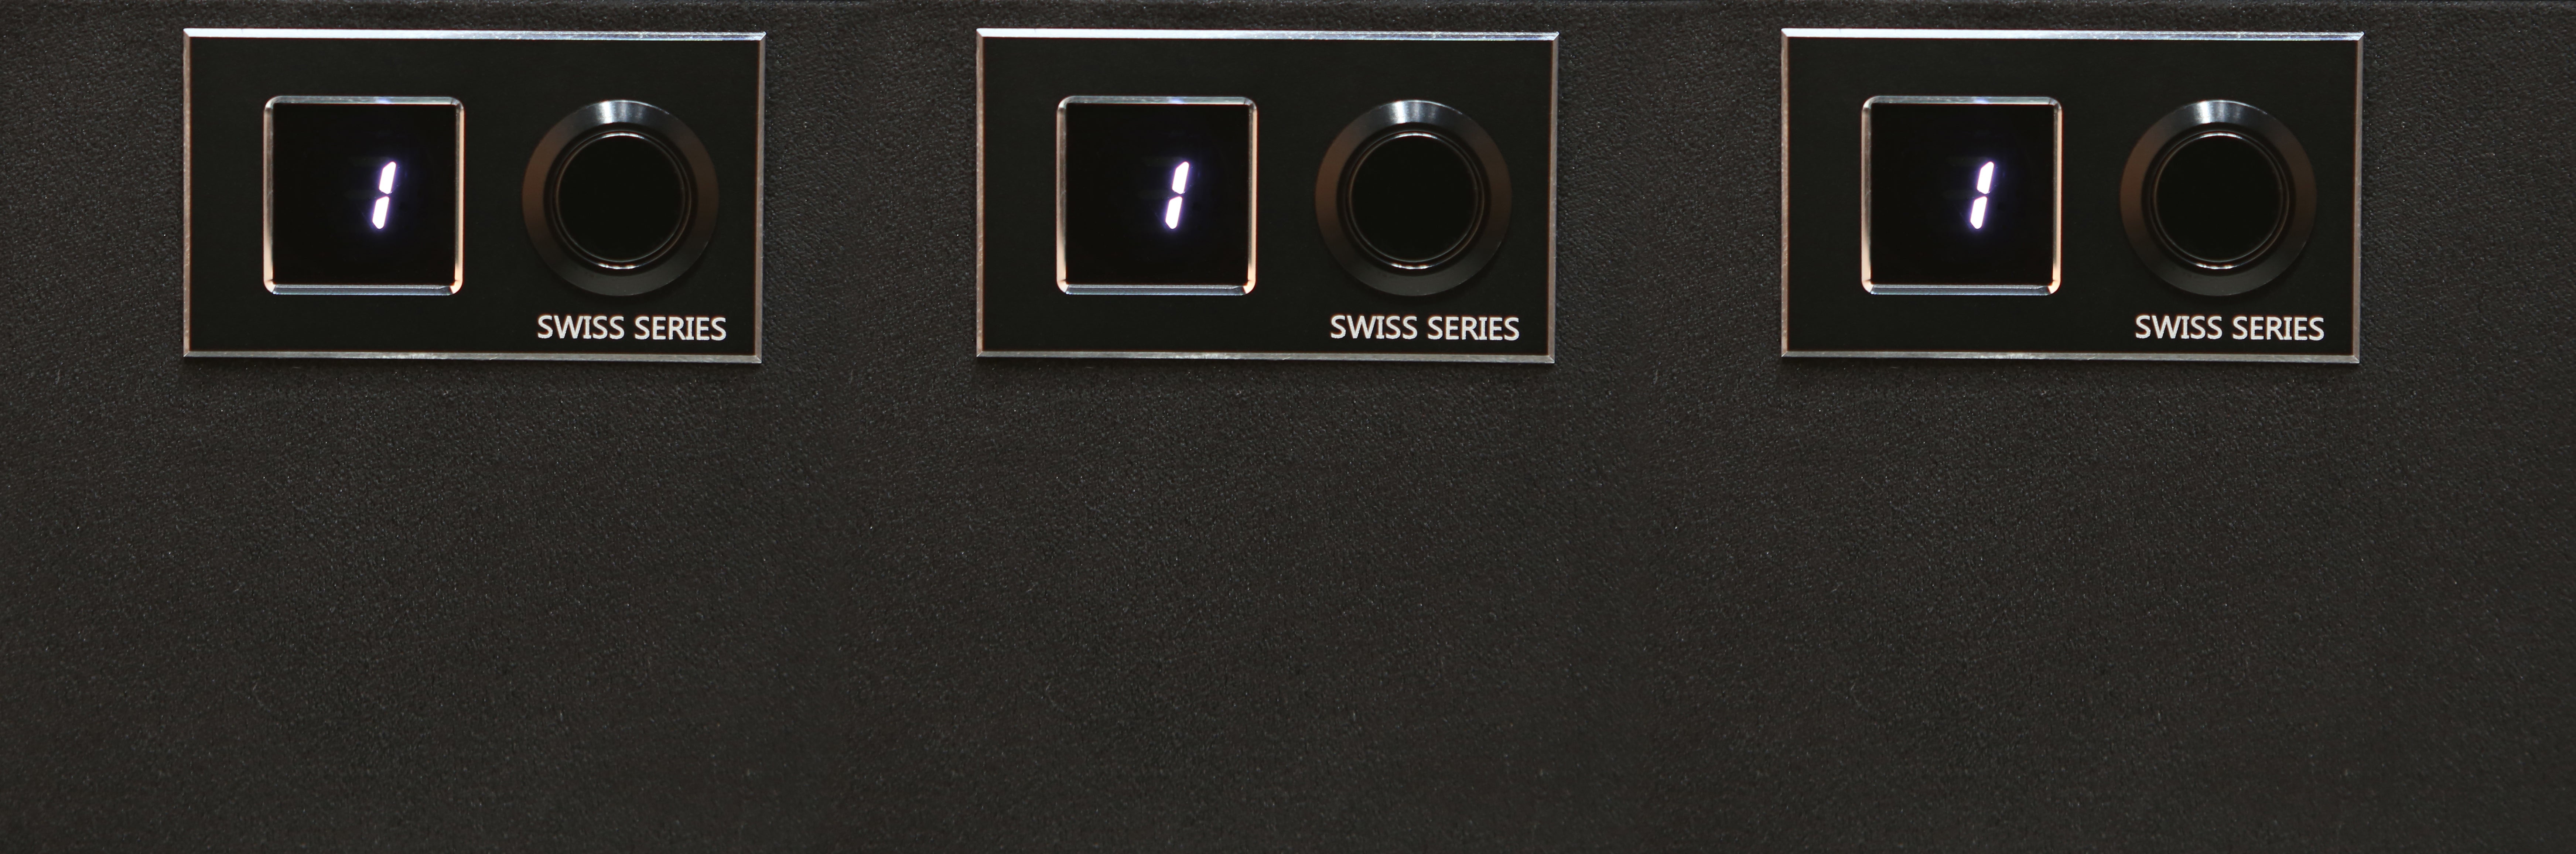 Swiss Series Lea 3.20 LB